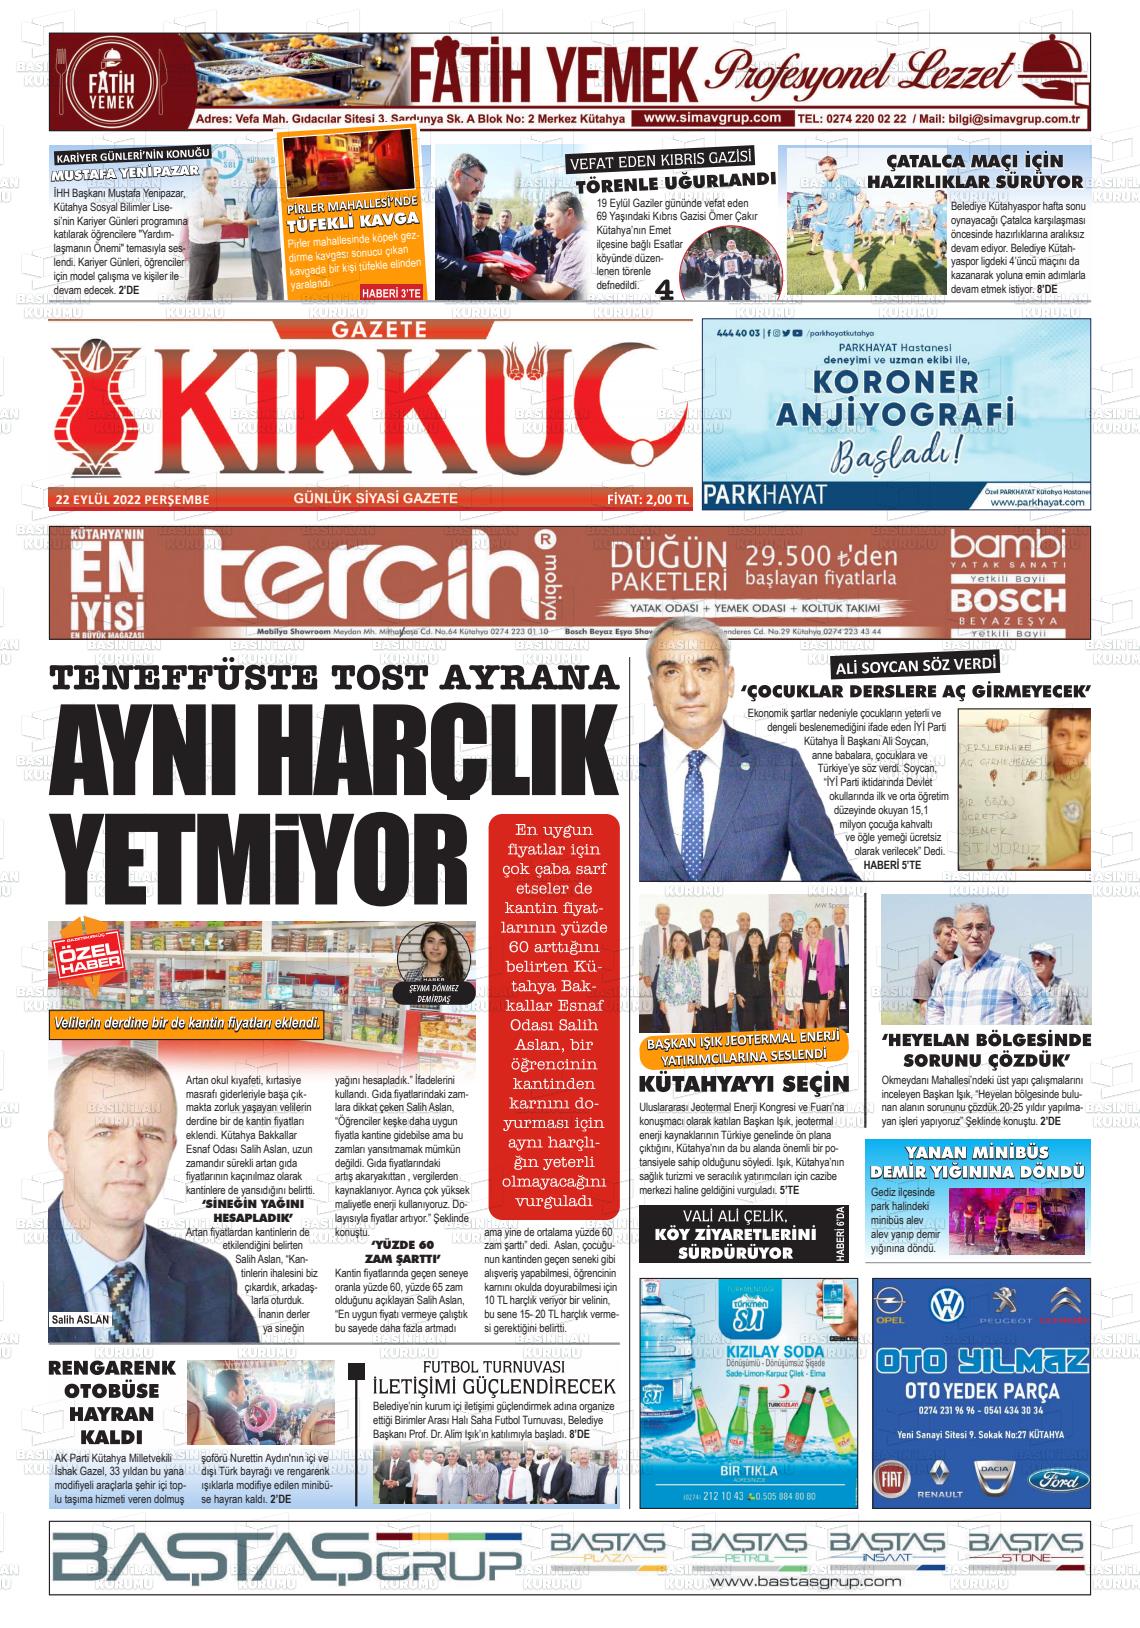 22 Eylül 2022 Gazete Kırküç Gazete Manşeti